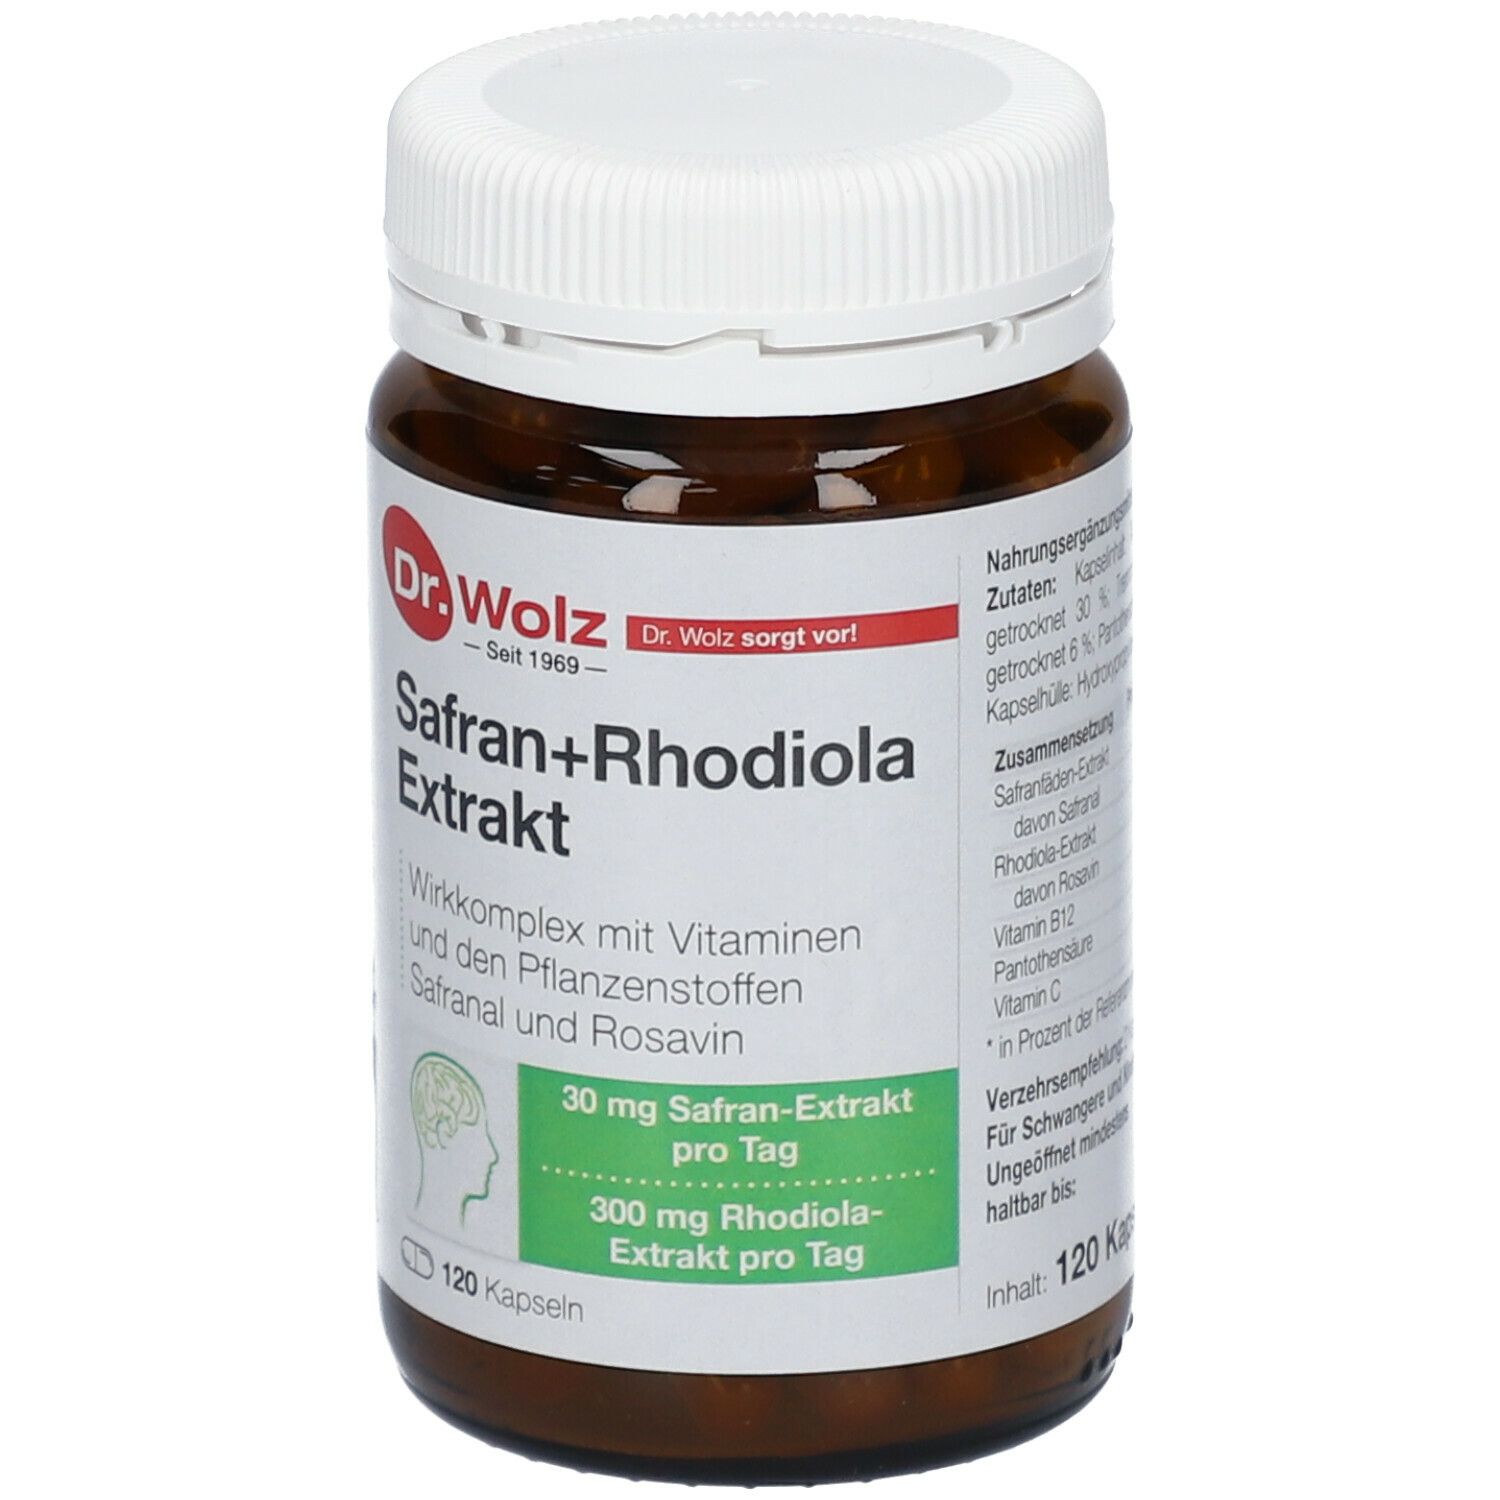 Safran+Rhodiola-Extrakt